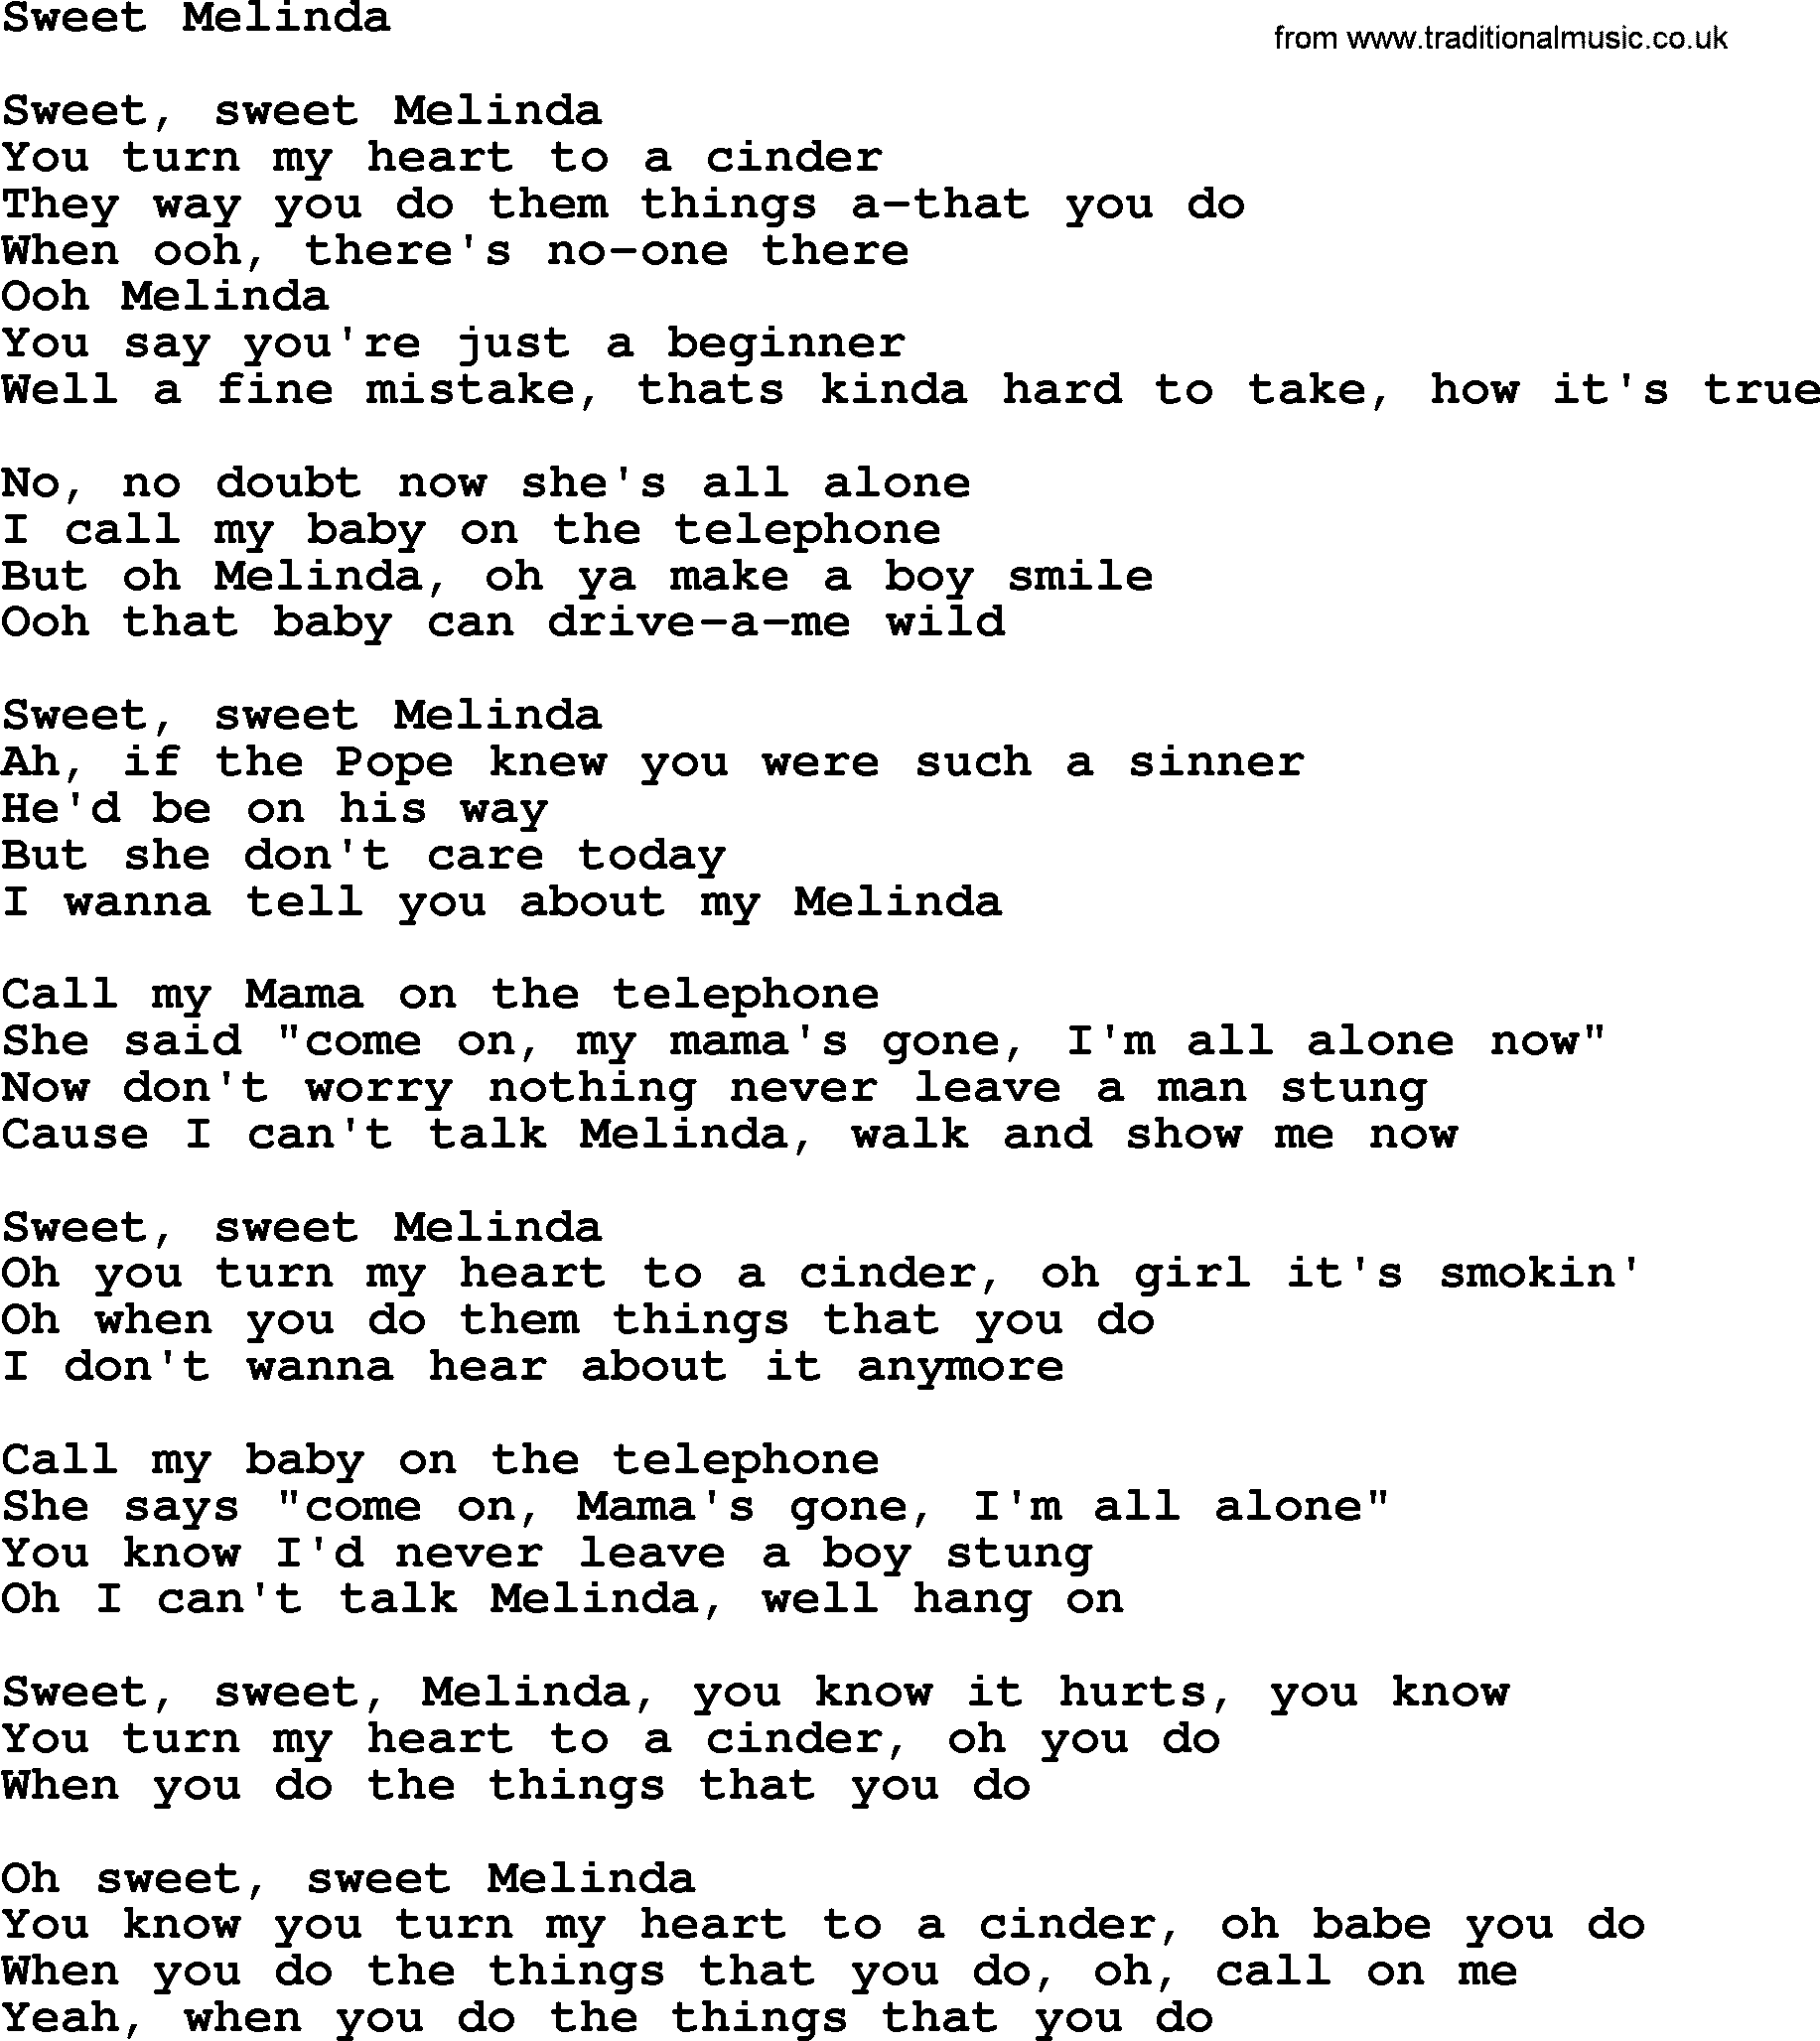 Bruce Springsteen song: Sweet Melinda lyrics